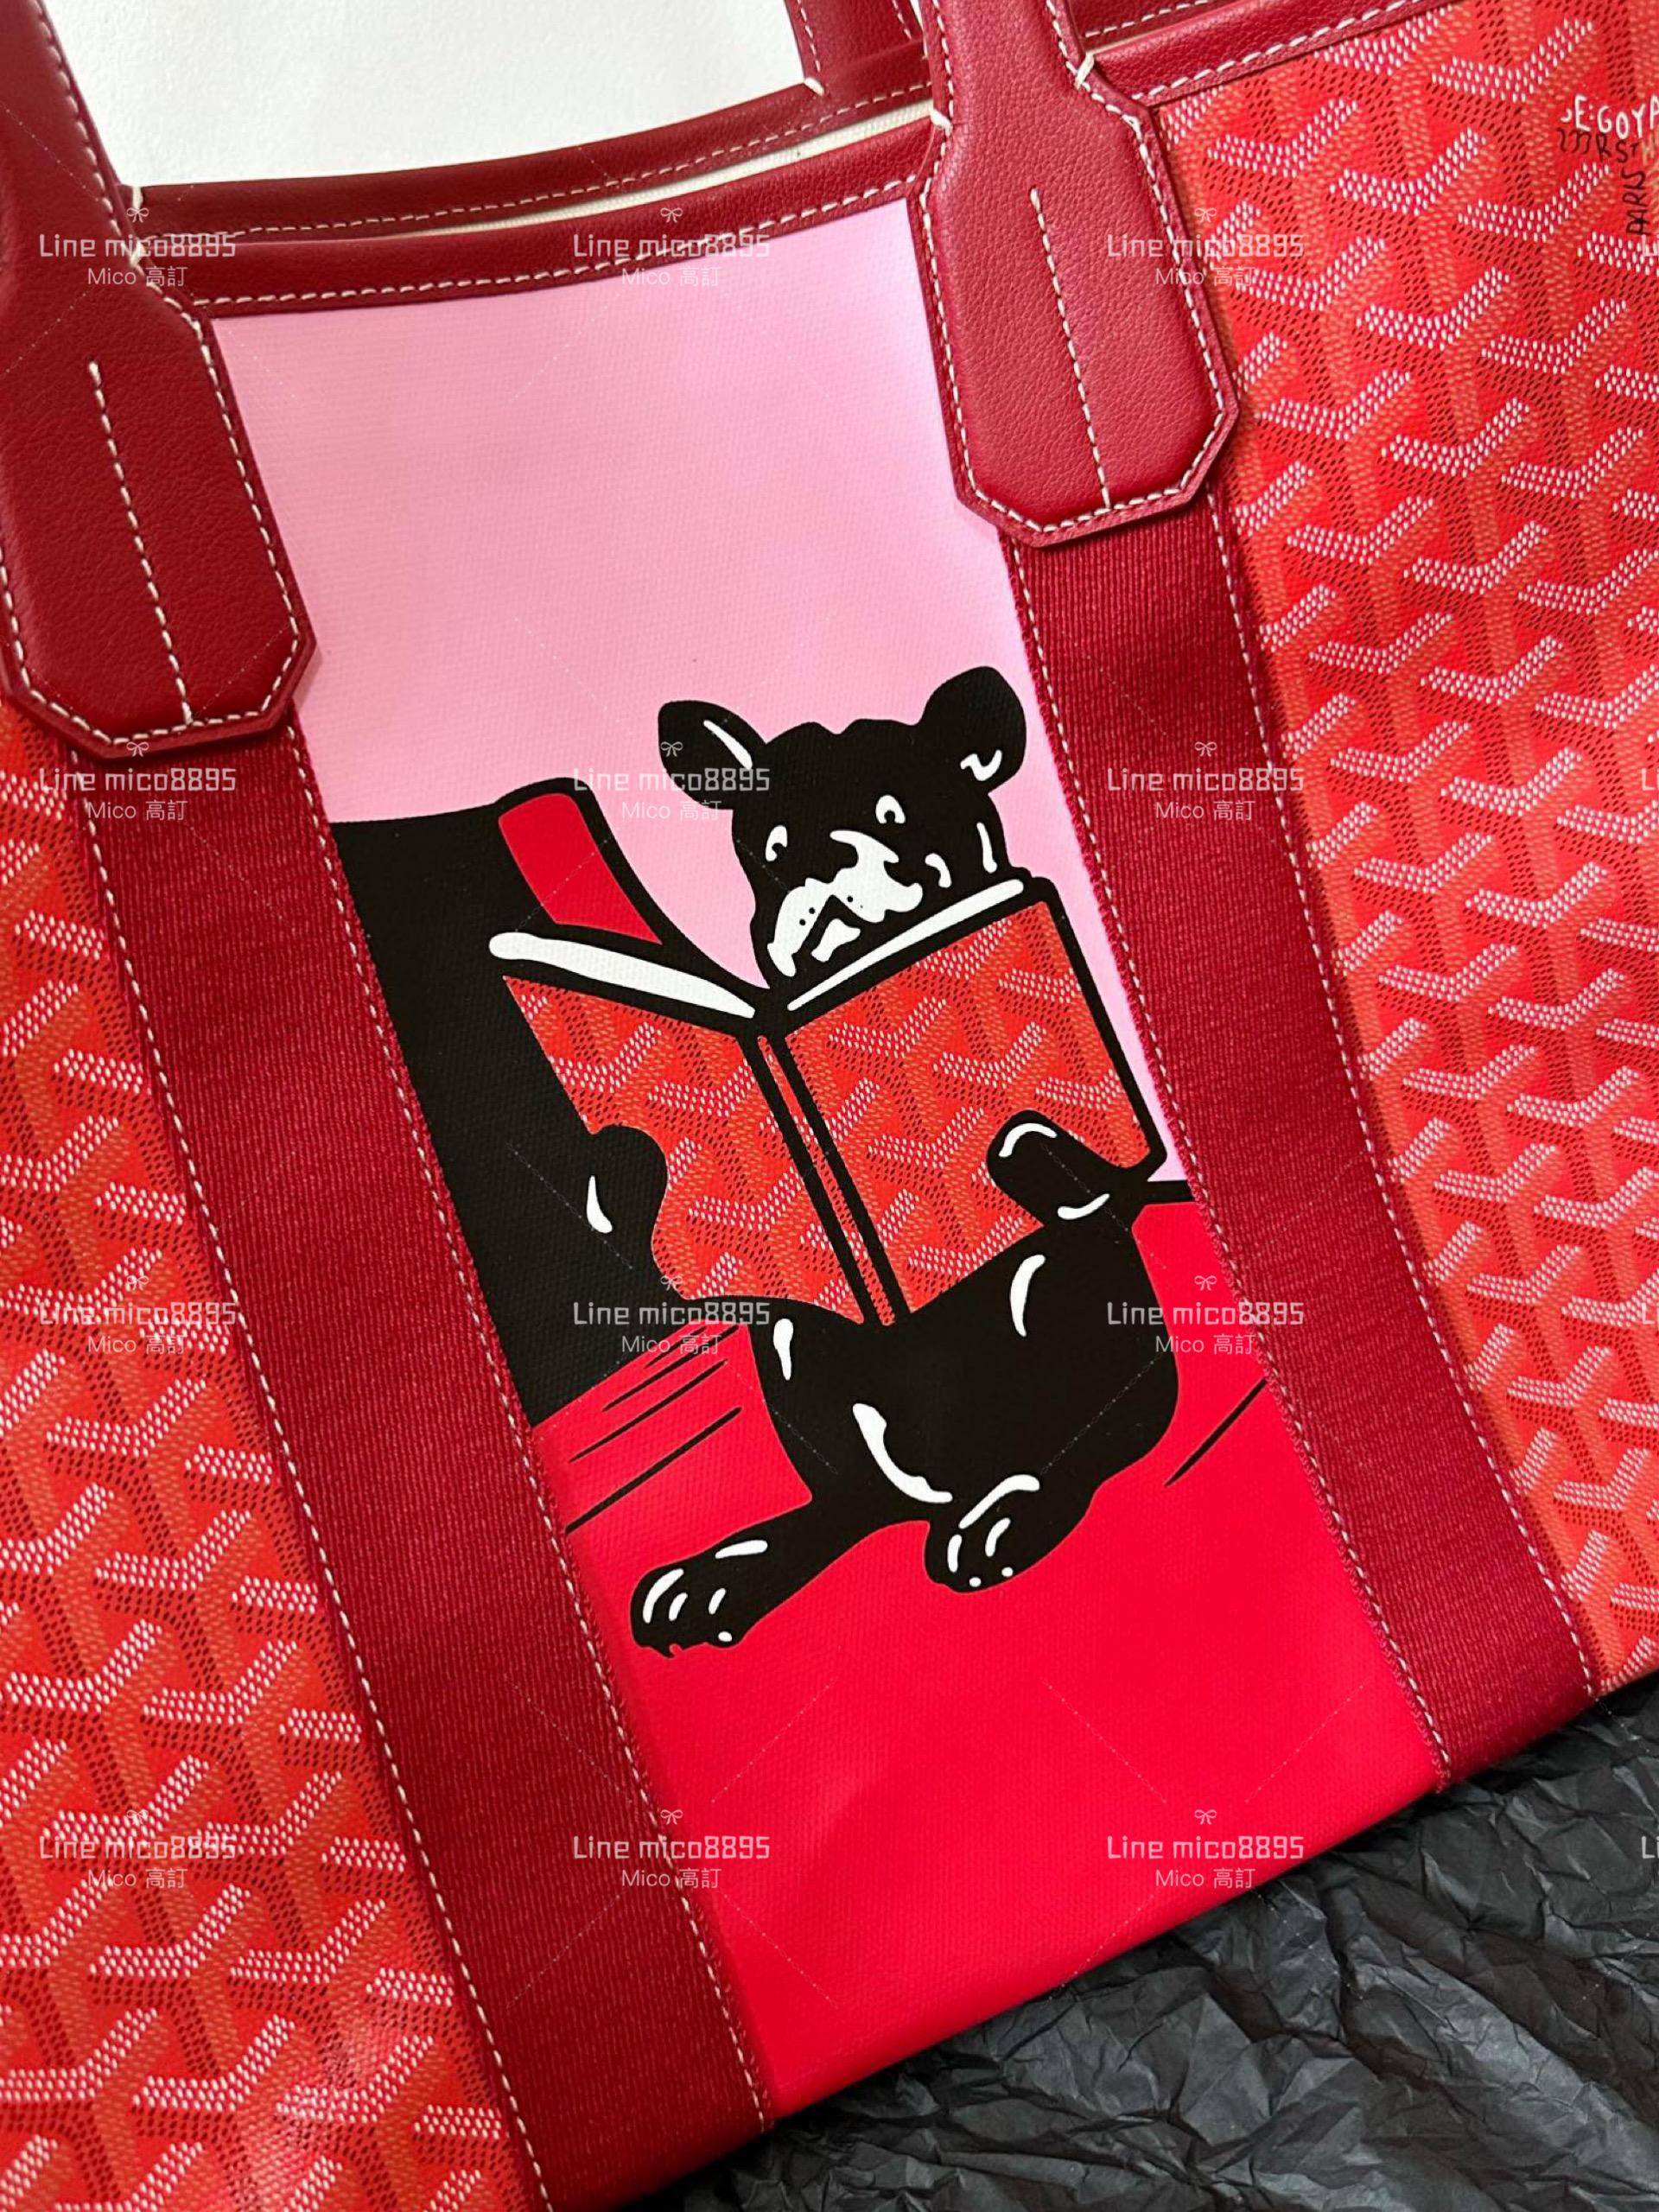 Goyard villette tote彩繪法鬥🐶托特包 暗紅色 寵物包/通勤包/大包 45cm